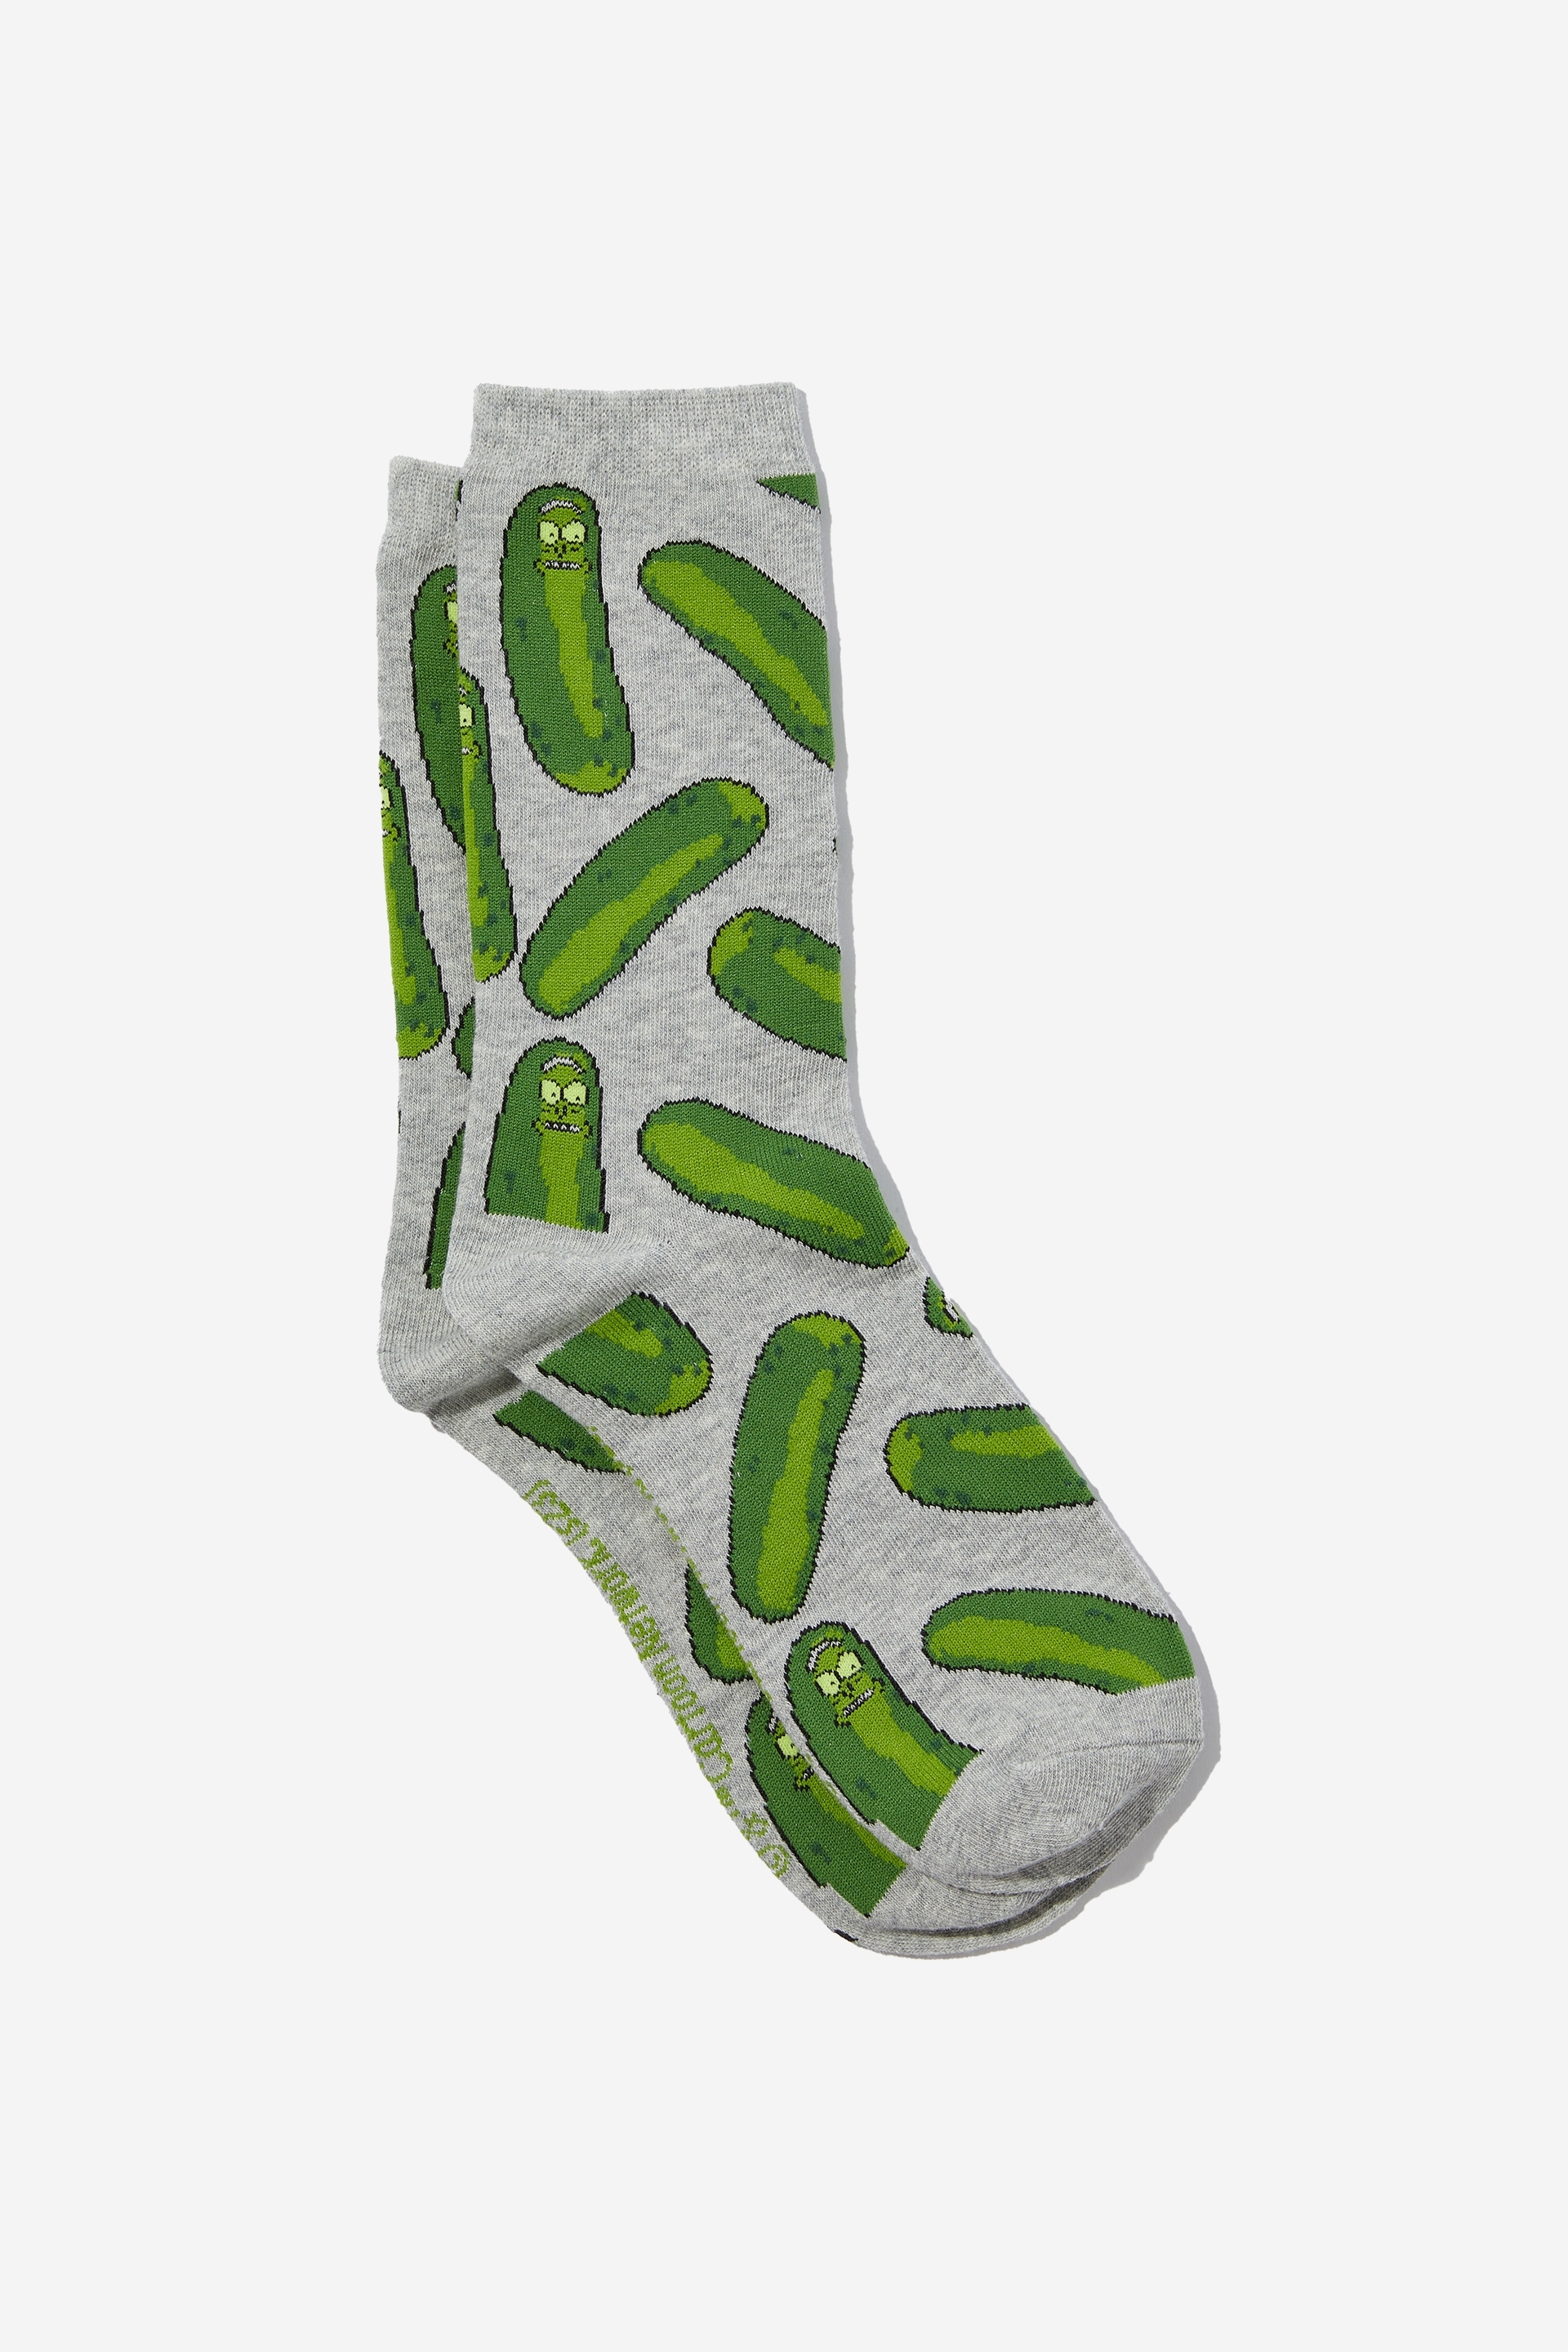 Typo - Rick & Morty Socks - Lcn wb rick & morty pickle ydg